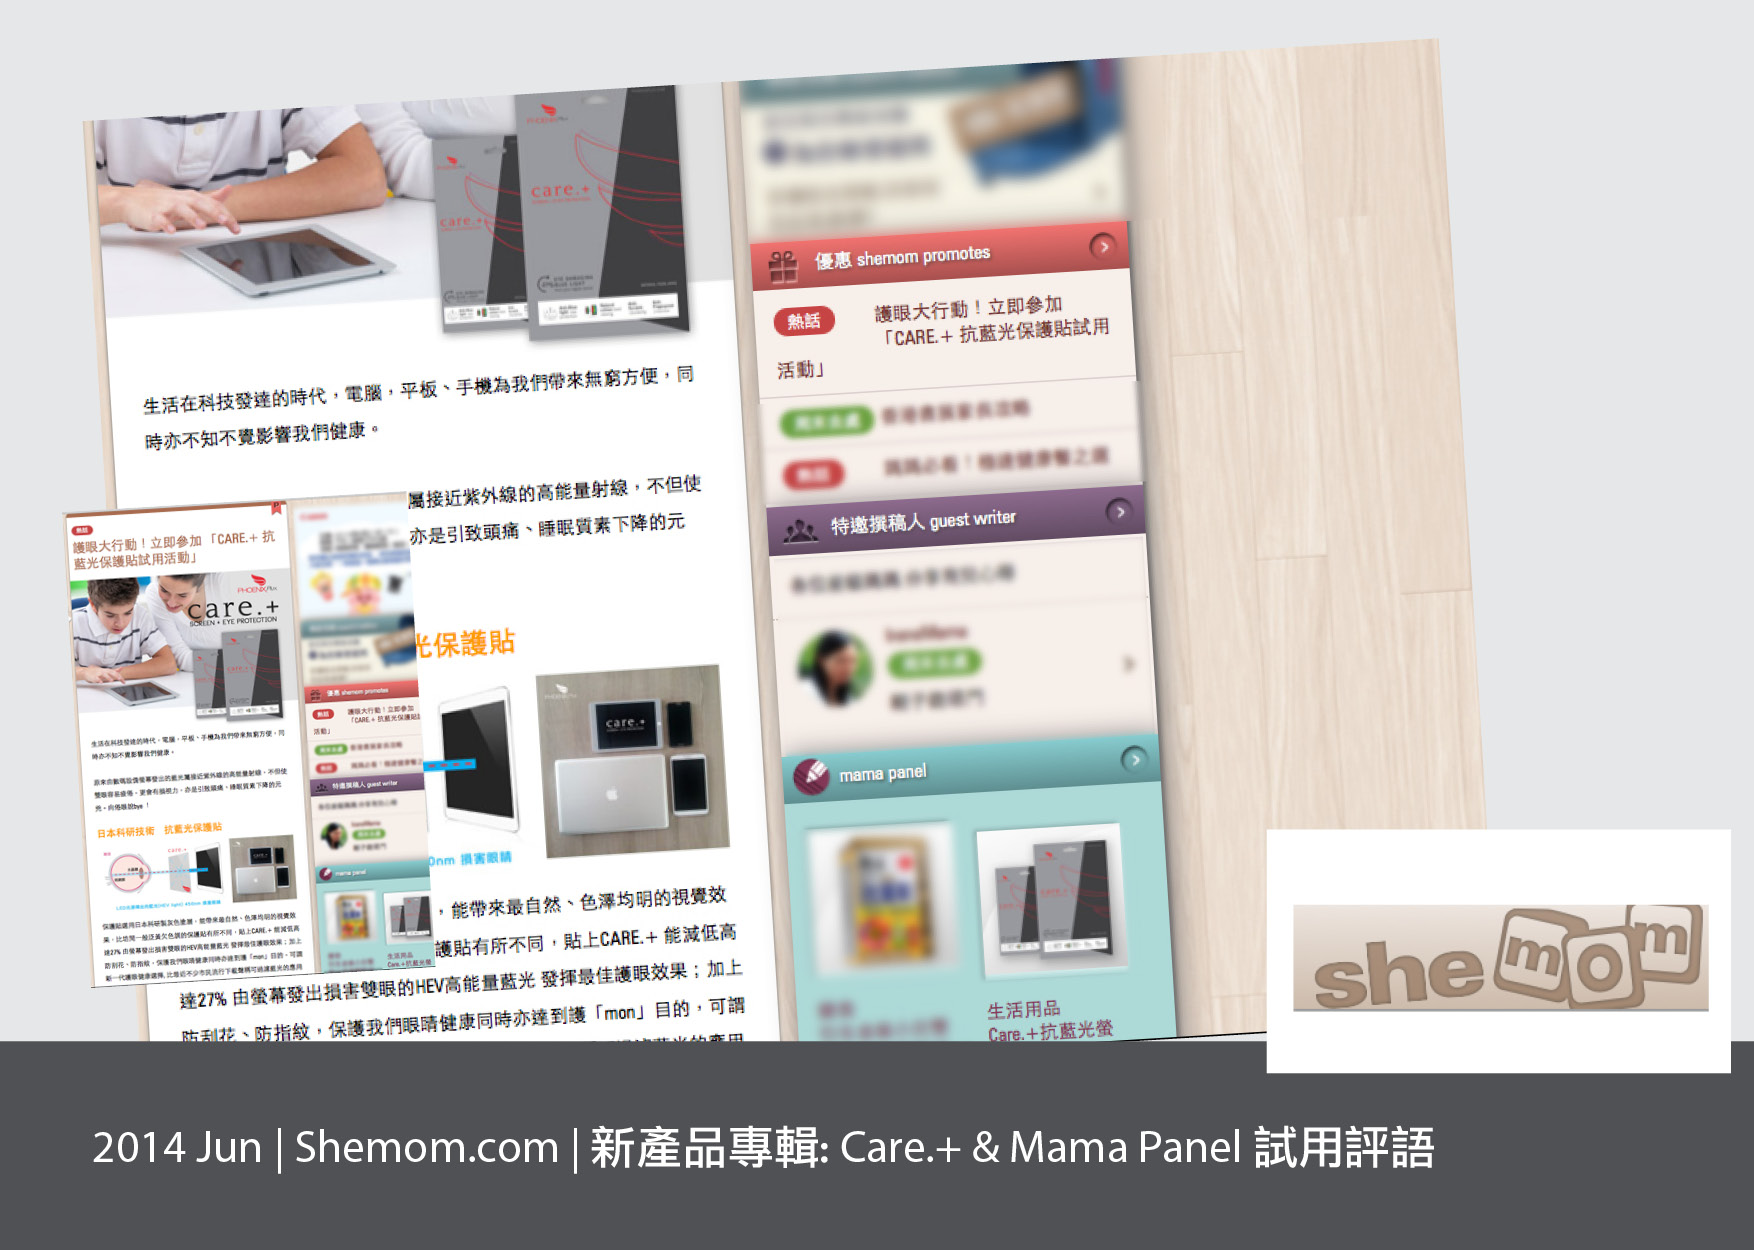 Shemom.com, Care.+ Feature & product trail recruitment